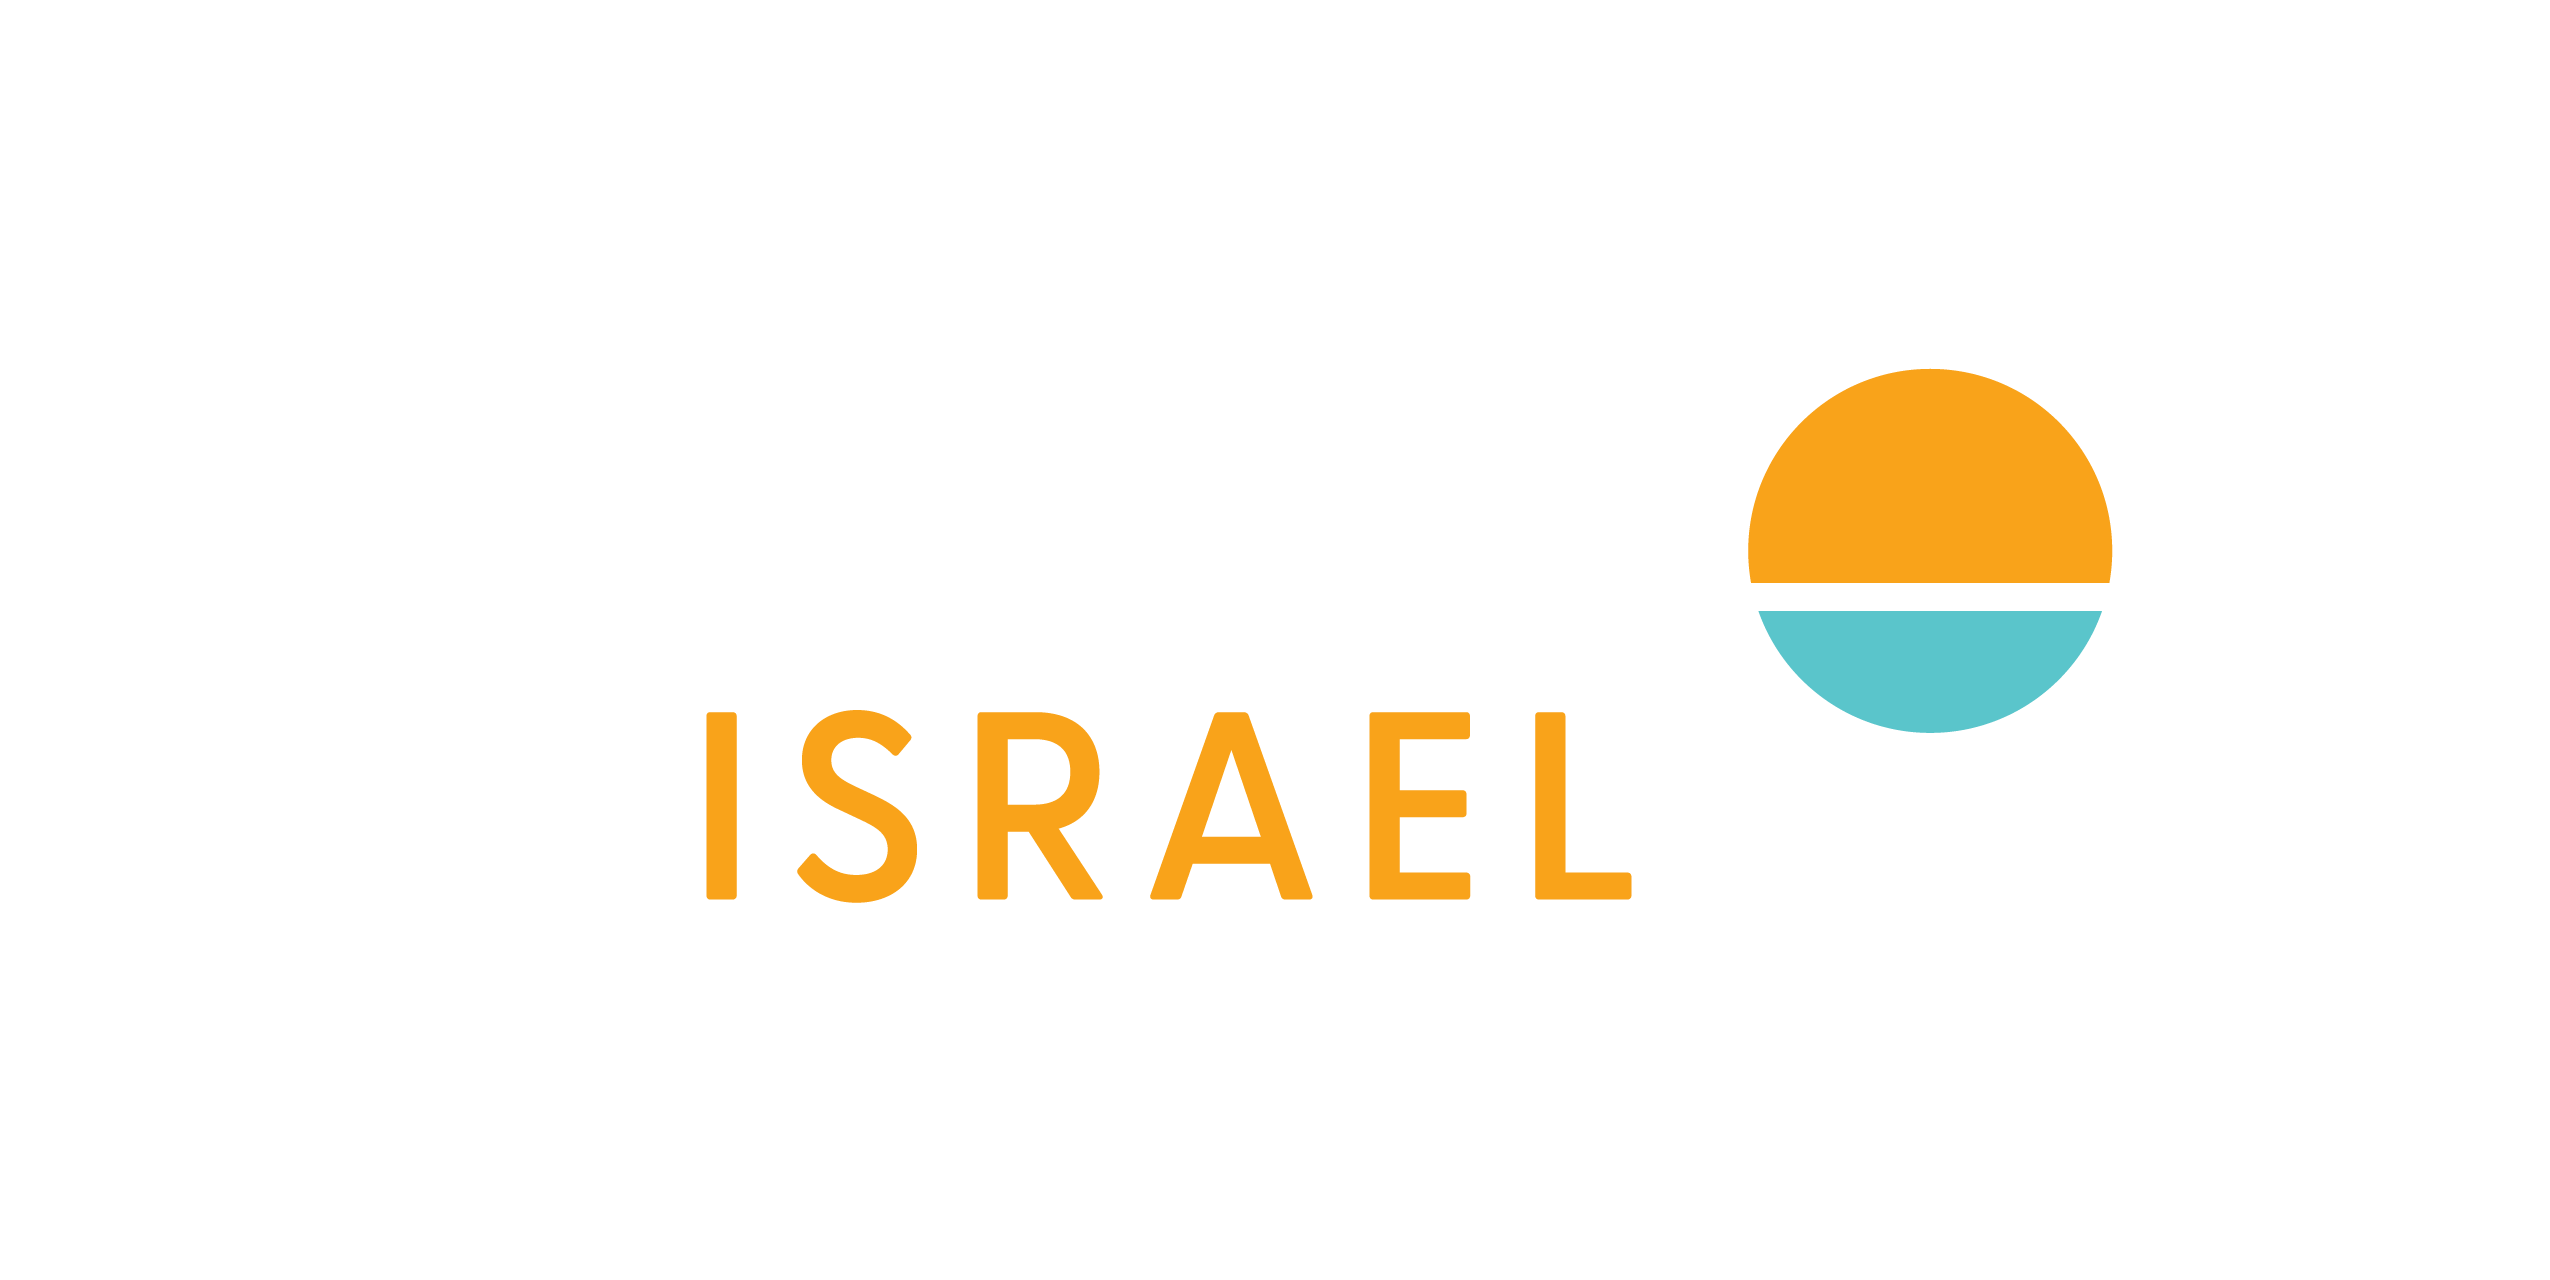 Yallah! Israel